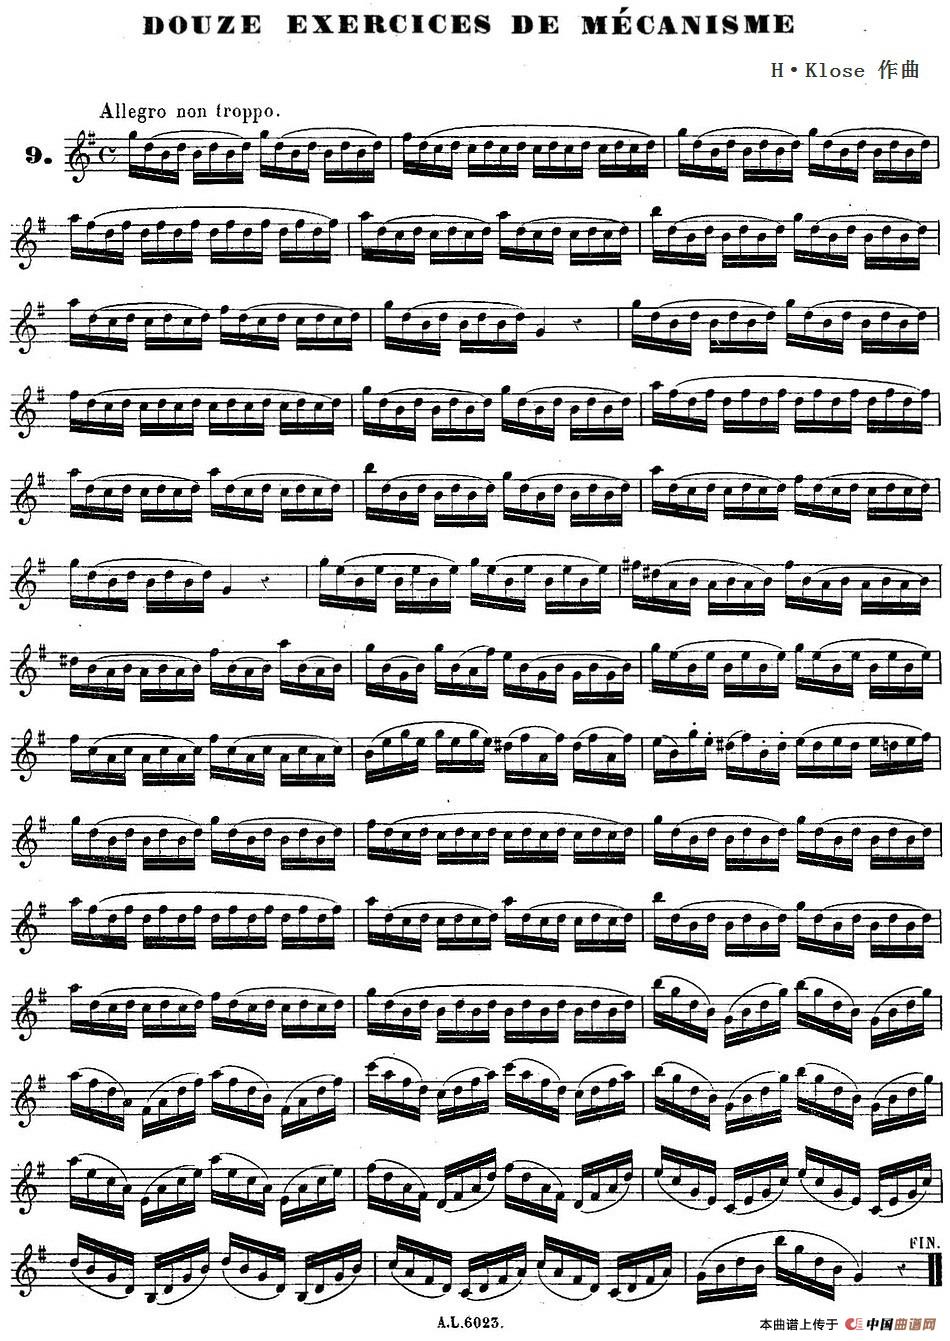 H·Klose练习曲（douze exercices de mecanisme—9）(1)_HKlose二重奏练习曲_页面_26_缩小大小-.jpg